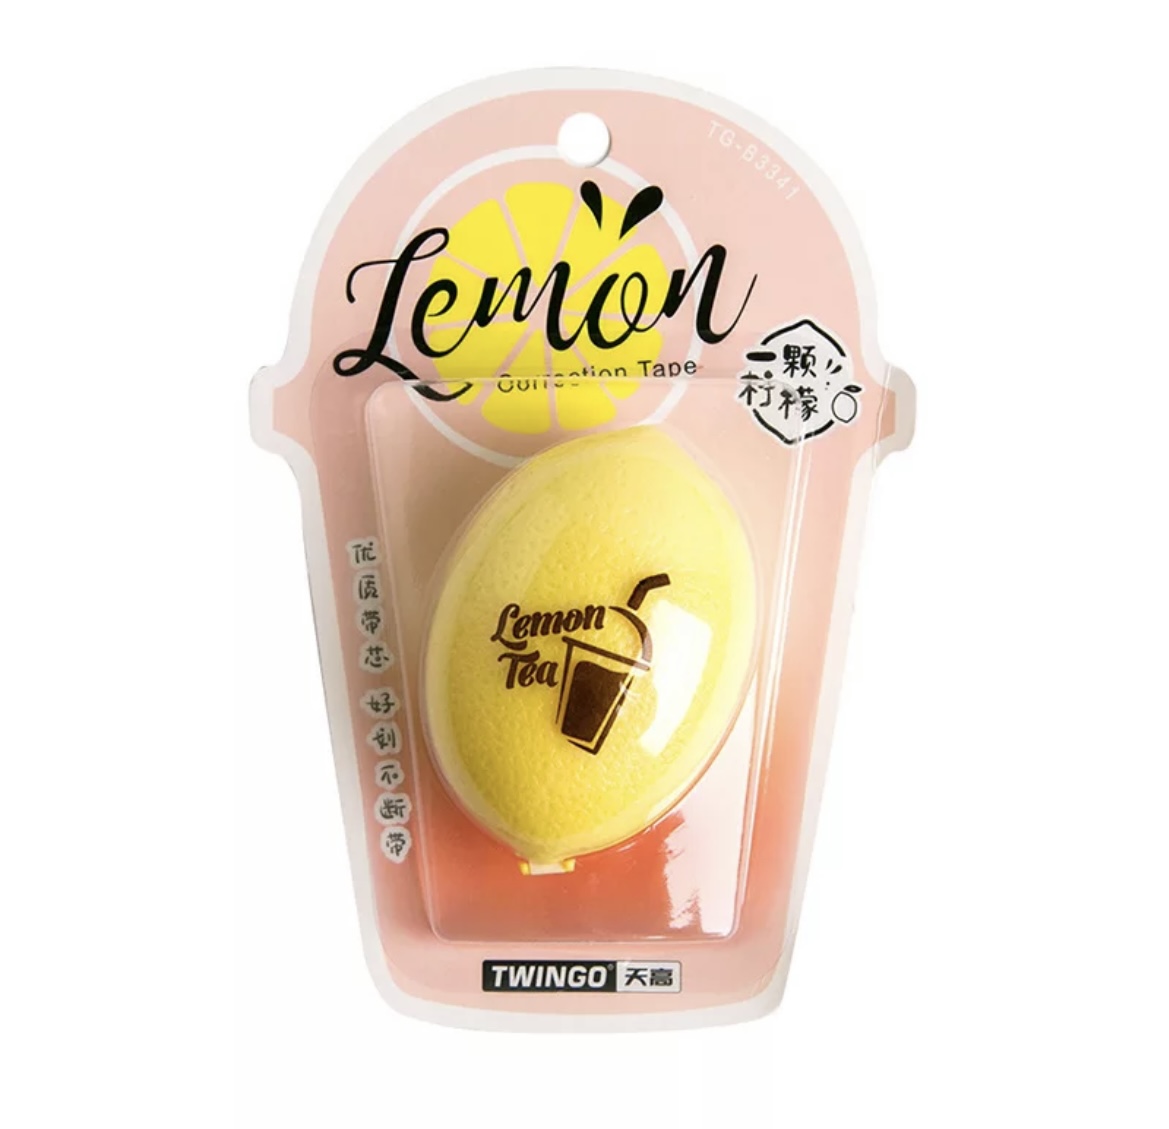 Imagen de corrector lemon tea